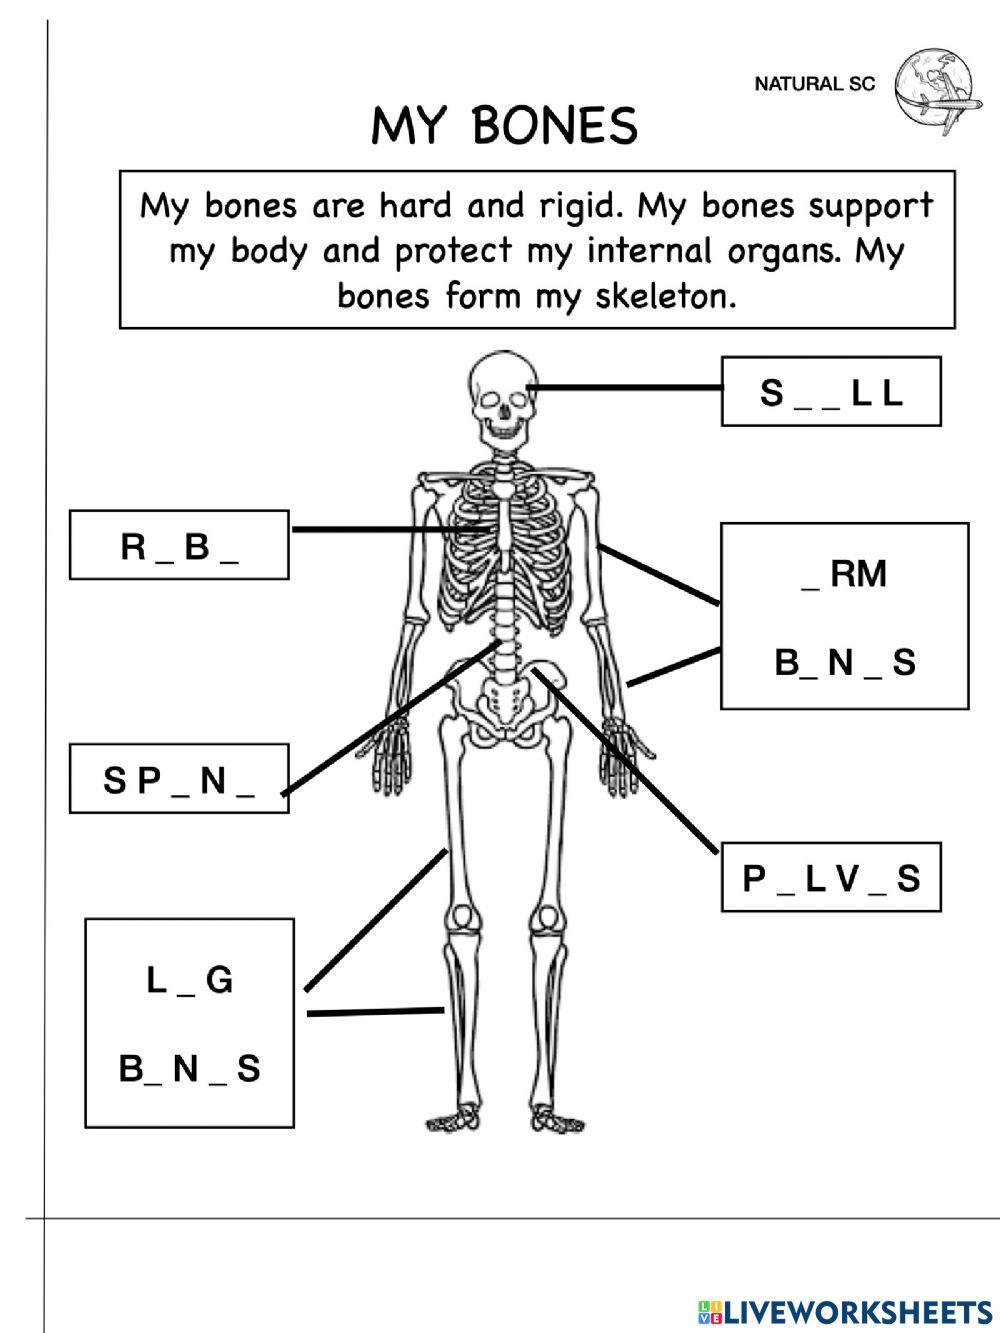 My bones